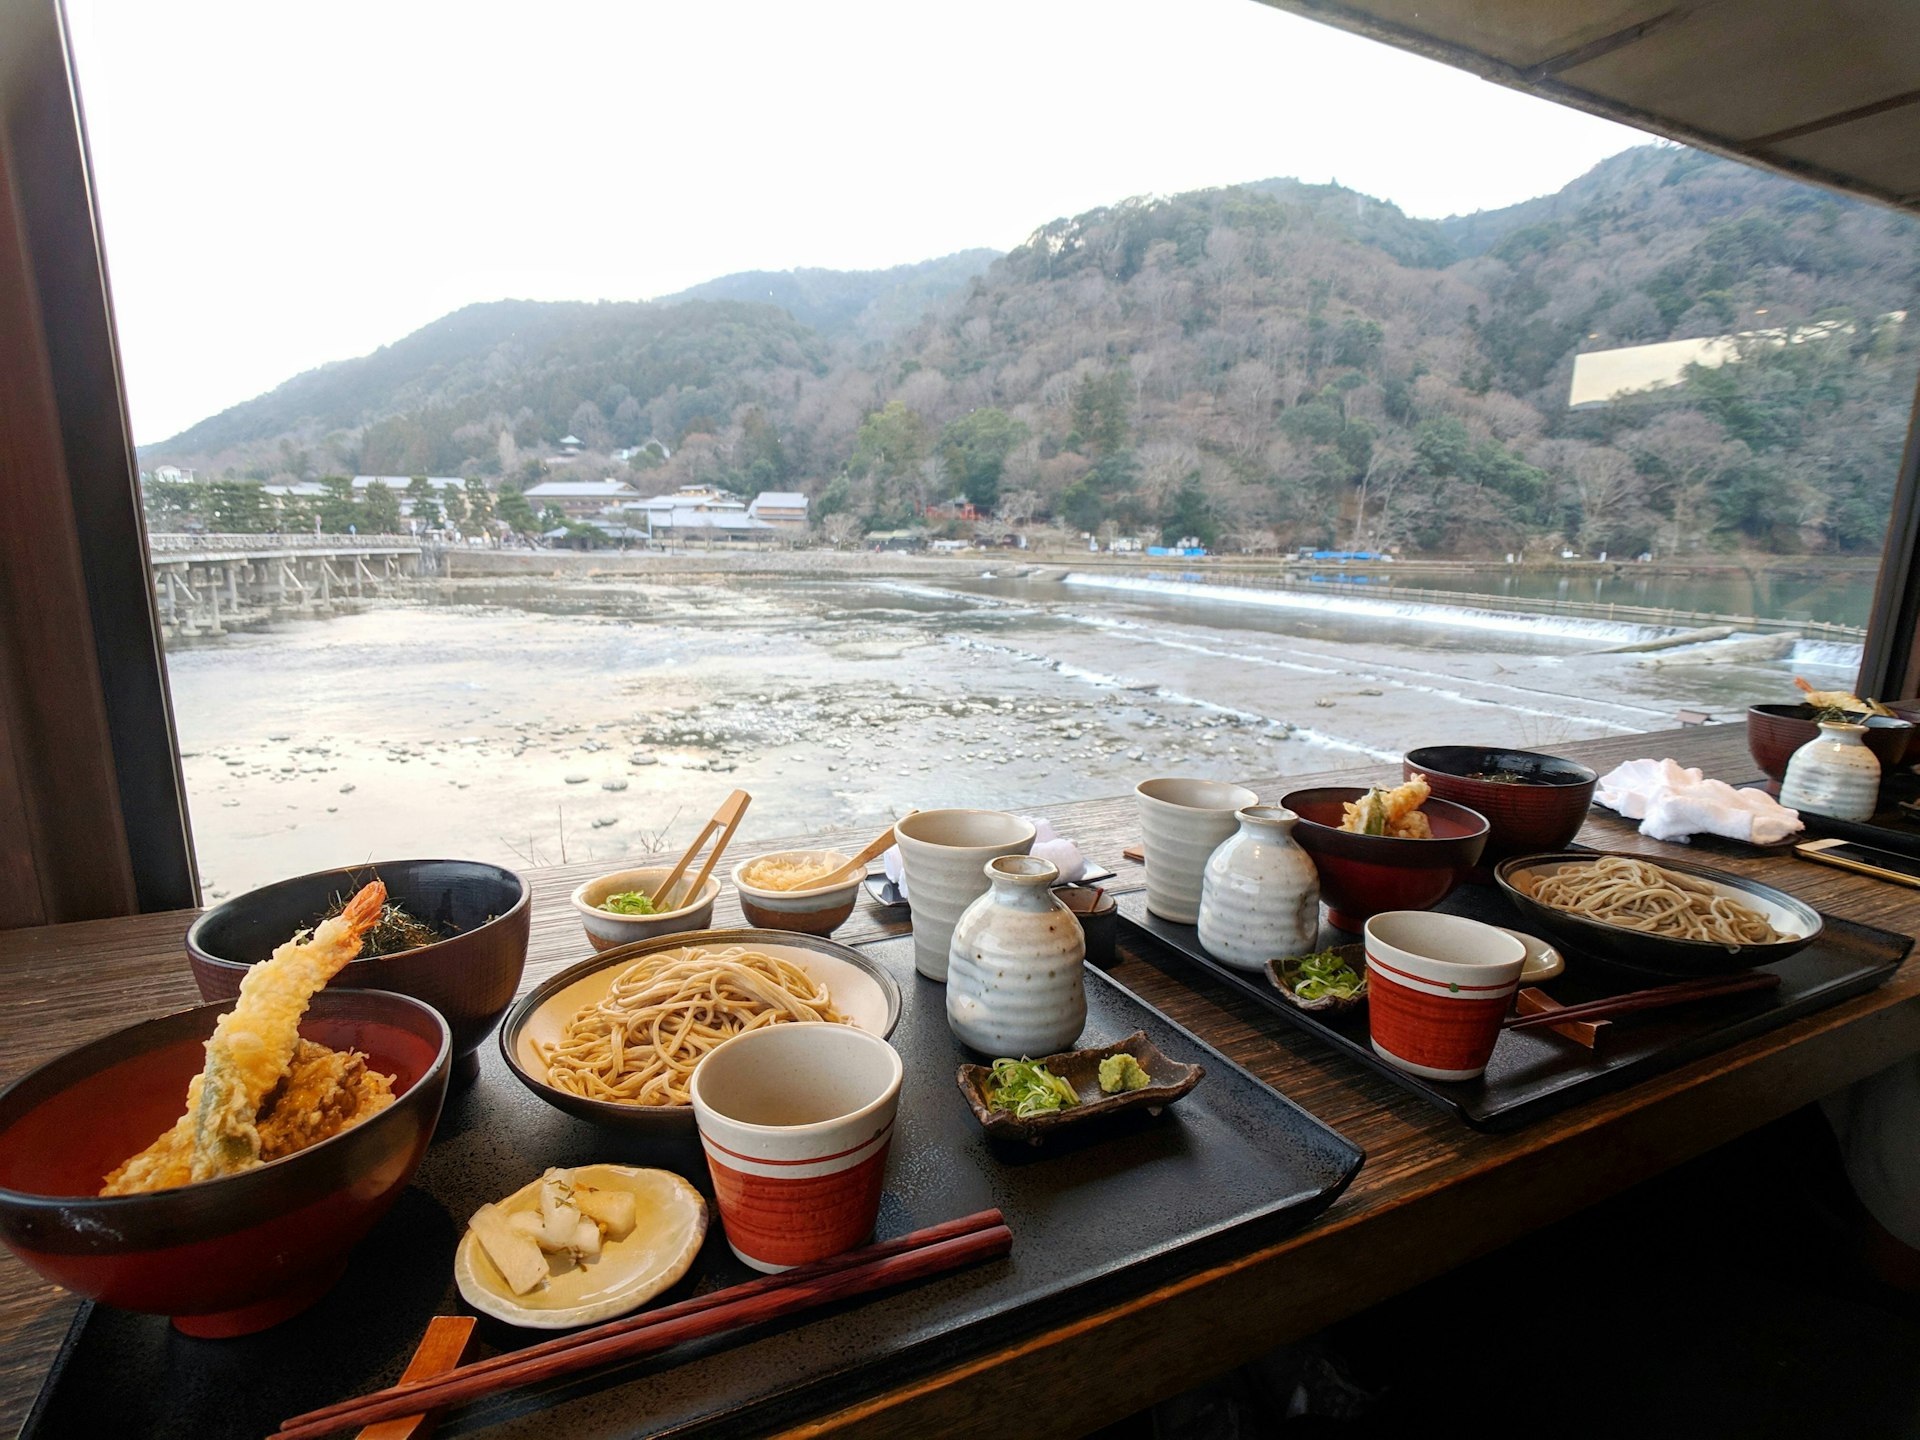 Soba and Tempura set meal Lunch at Yoshimura restaurant looking out to river view of Arashiyama Kyoto, Japan